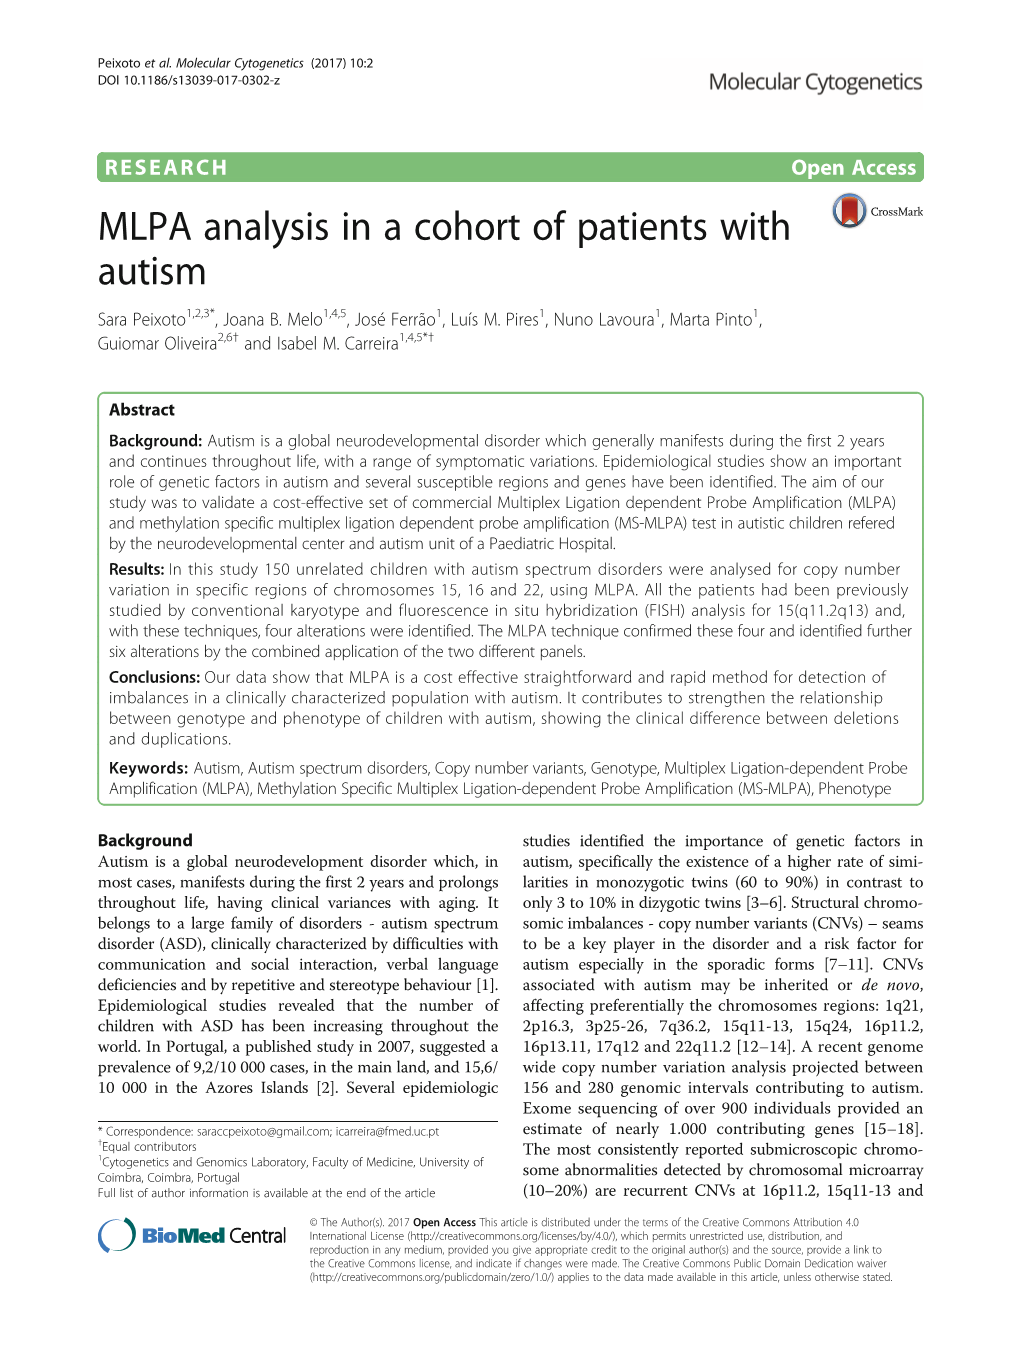 MLPA Analysis in a Cohort of Patients with Autism Sara Peixoto1,2,3*, Joana B